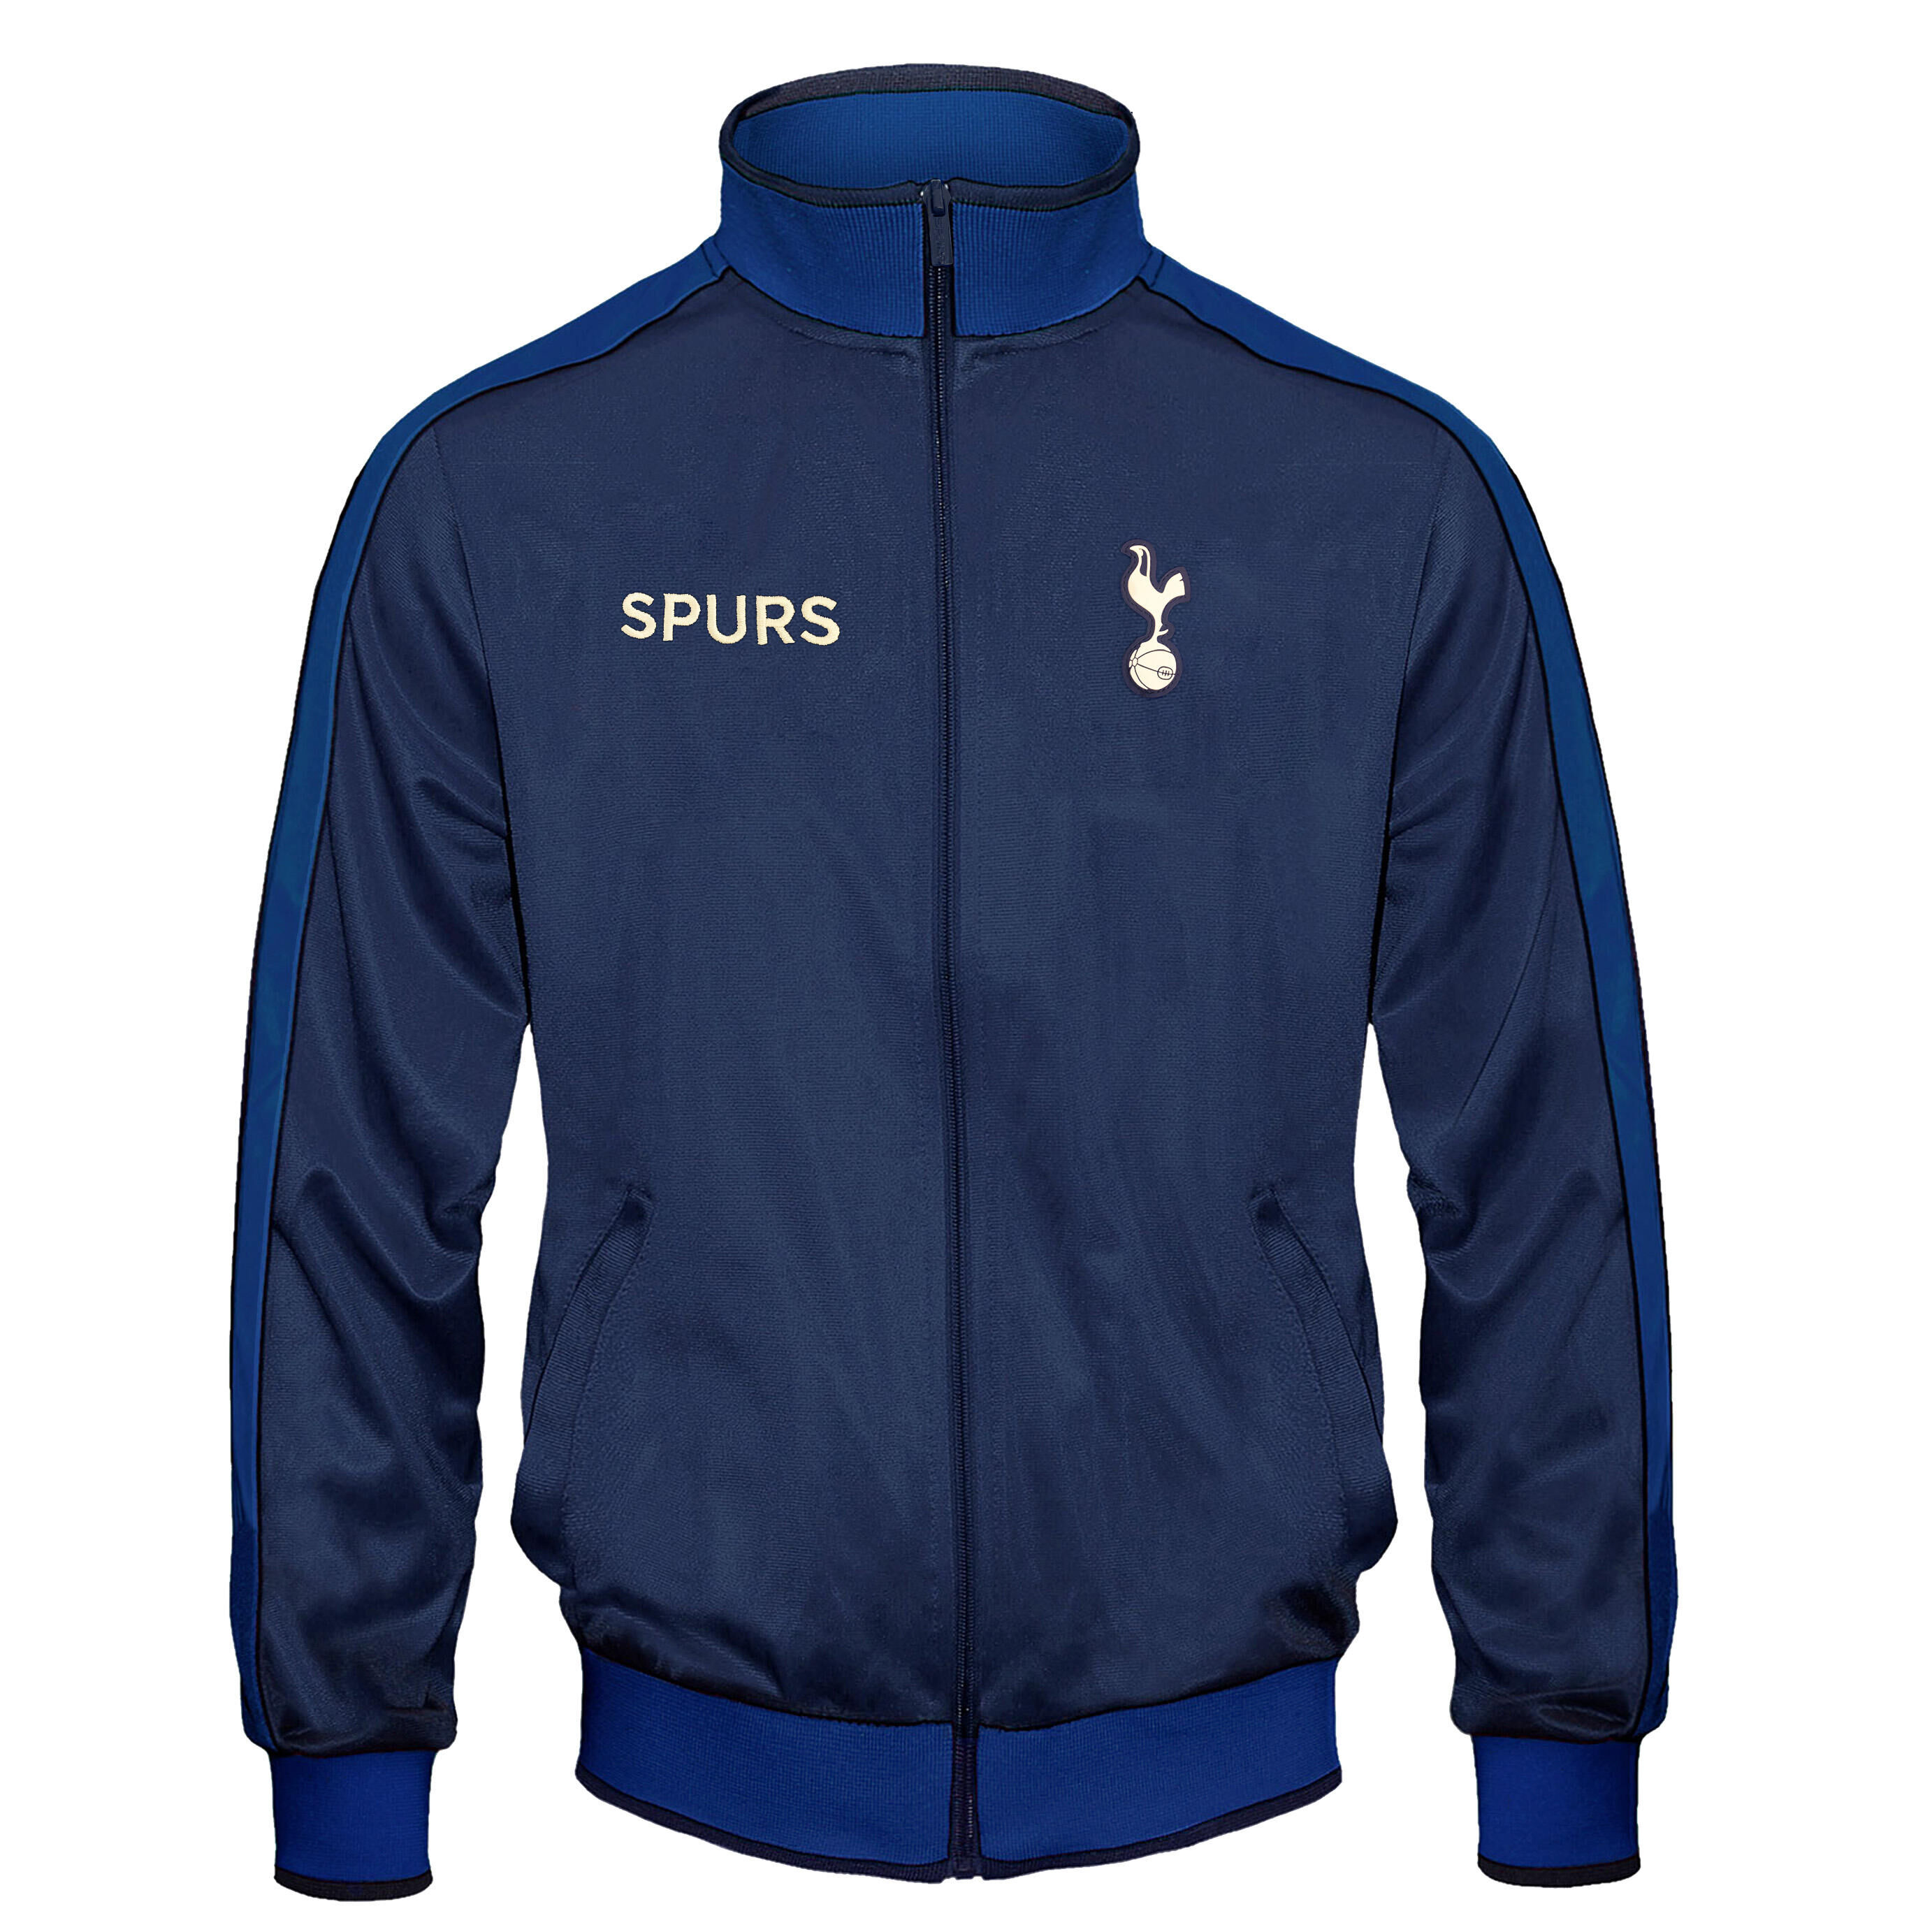 TOTTENHAM HOTSPUR Tottenham Hotspur Boys Jacket Track Top Retro OFFICIAL Football Gift